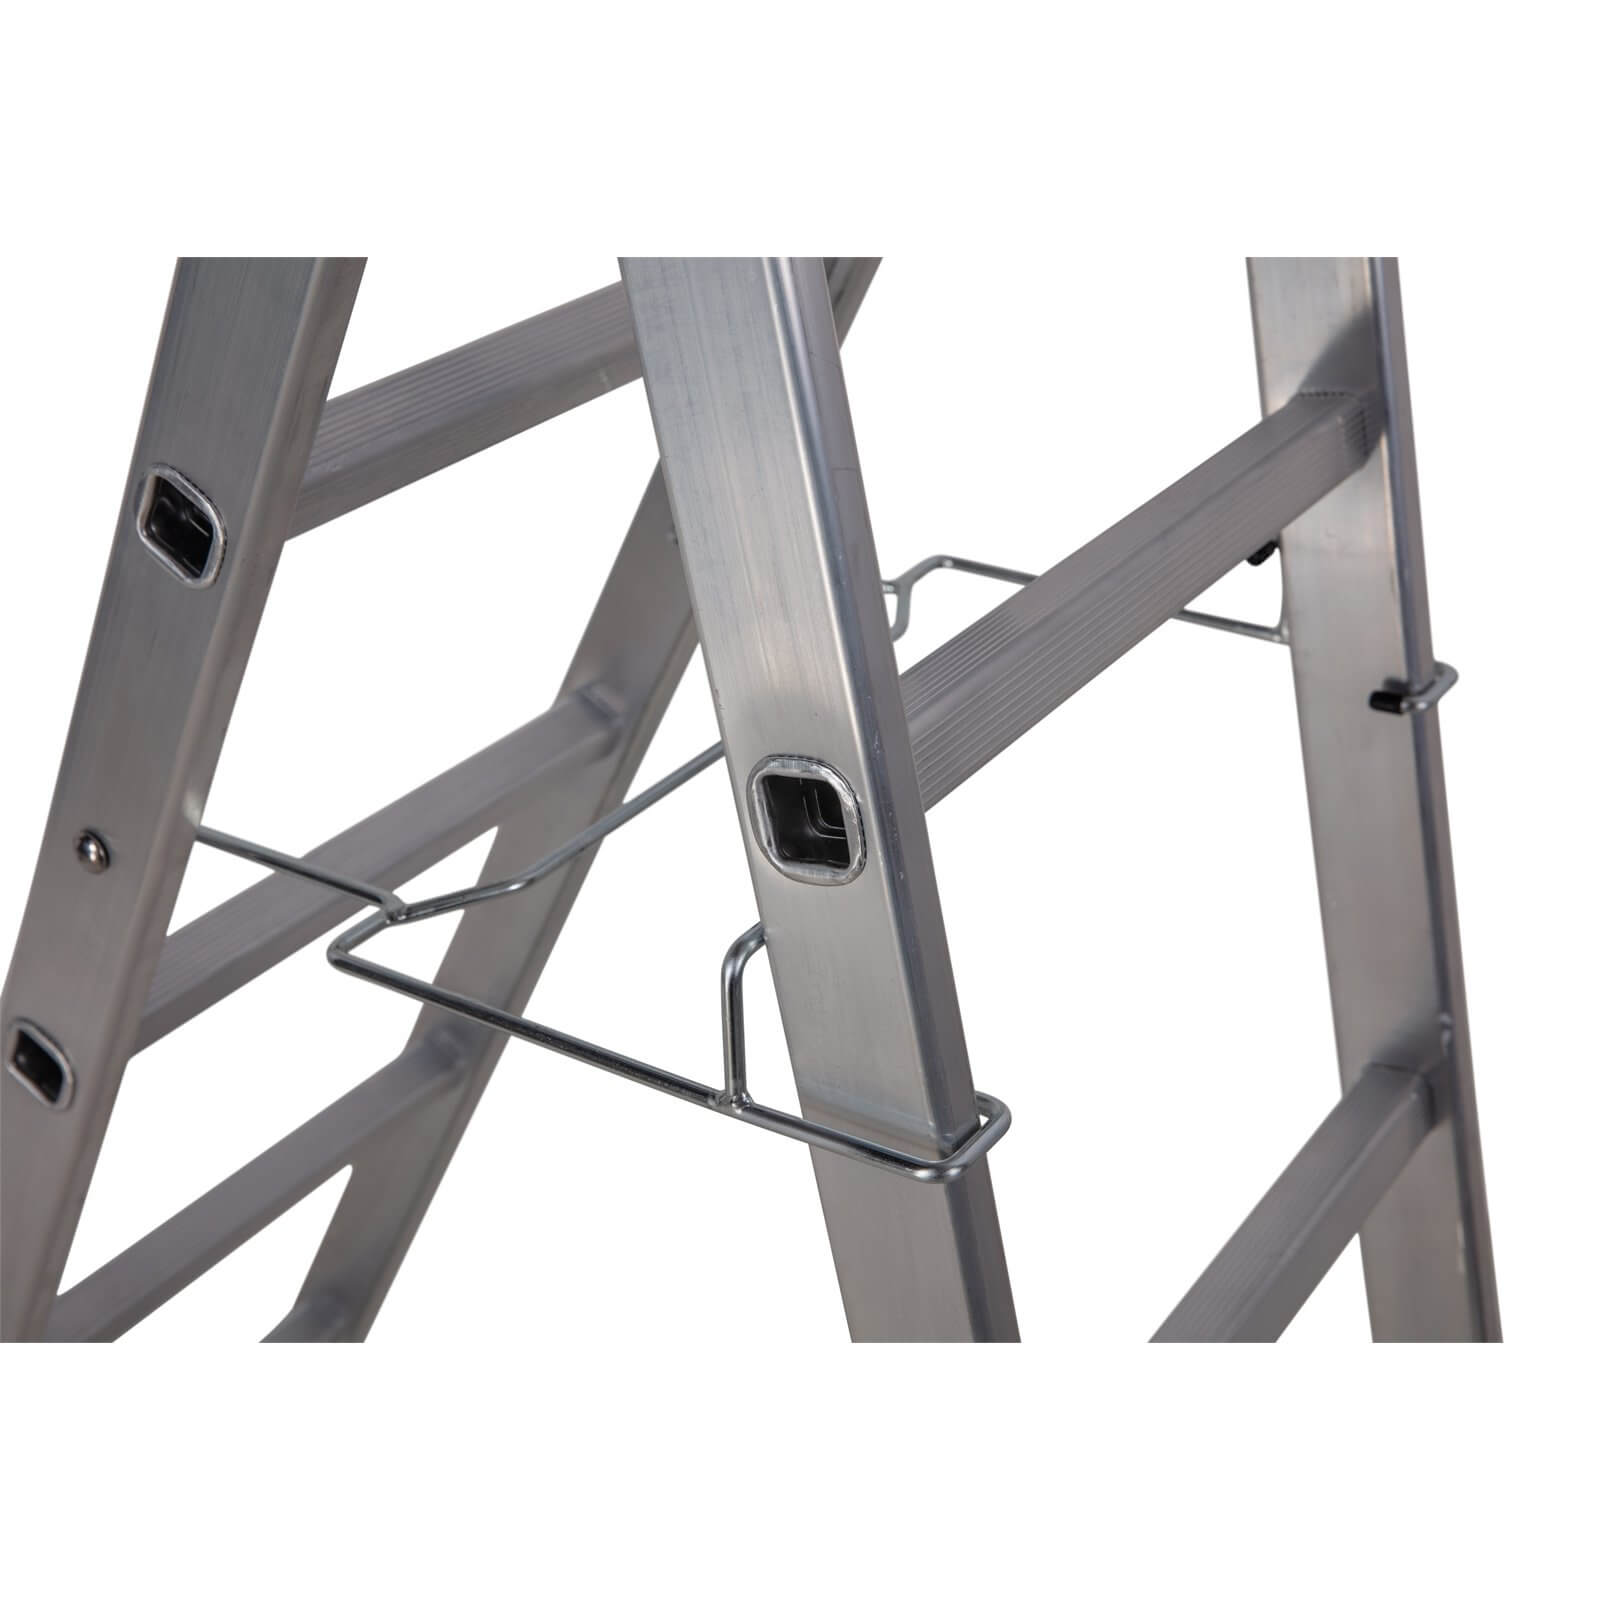 Werner Combination Ladder - 3 in 1